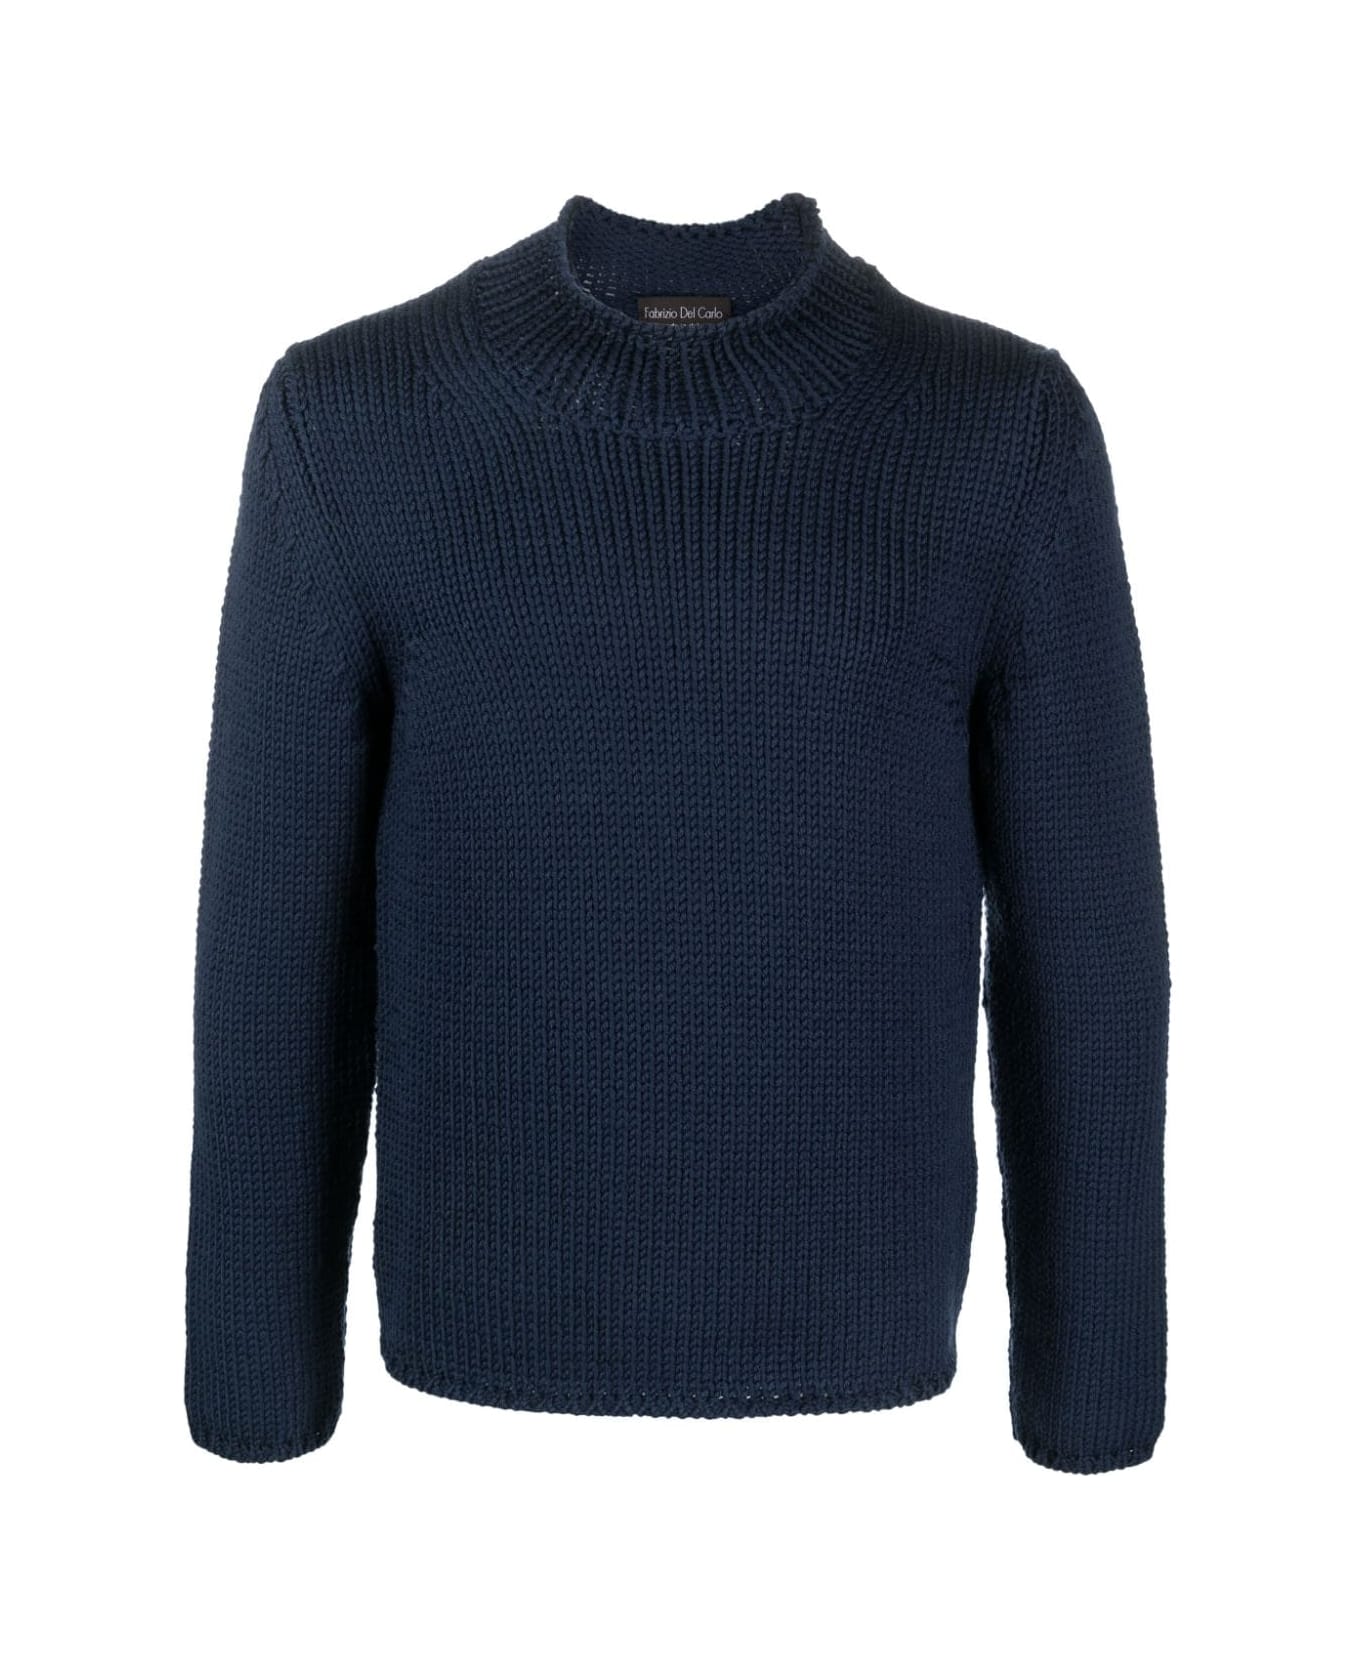 Fabrizio del Carlo Wool Round Neck Sweater - Teal